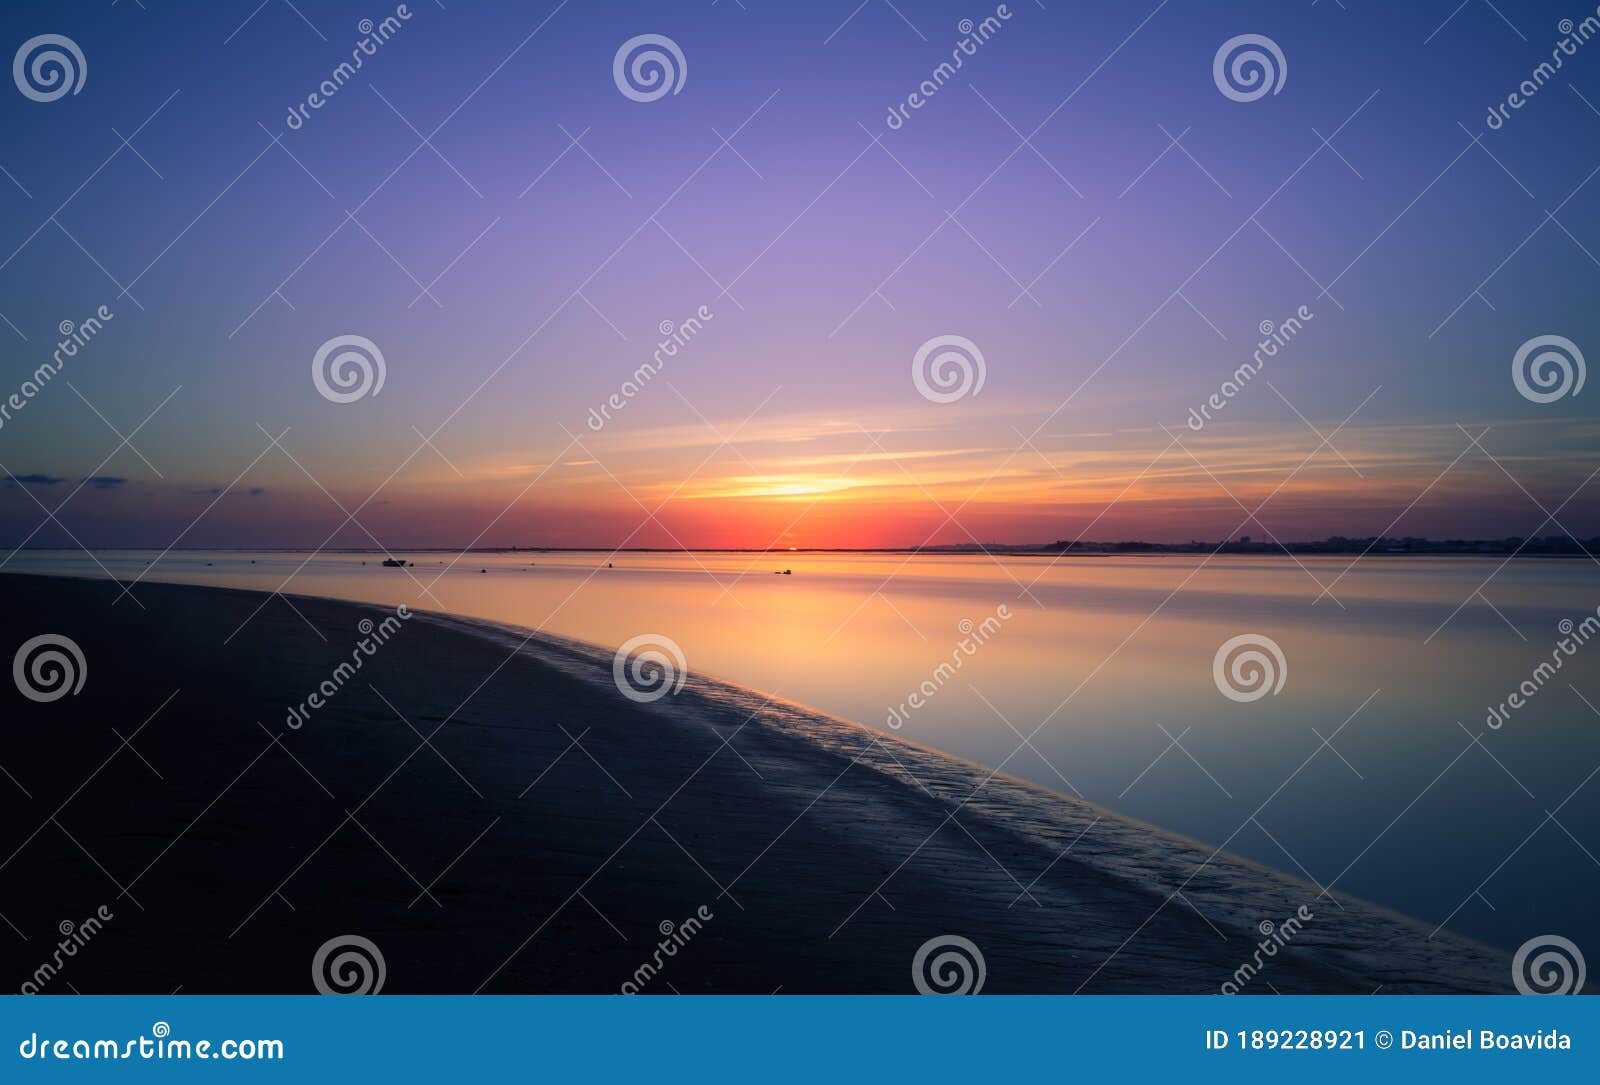 sunset at ilha da armona, portugal